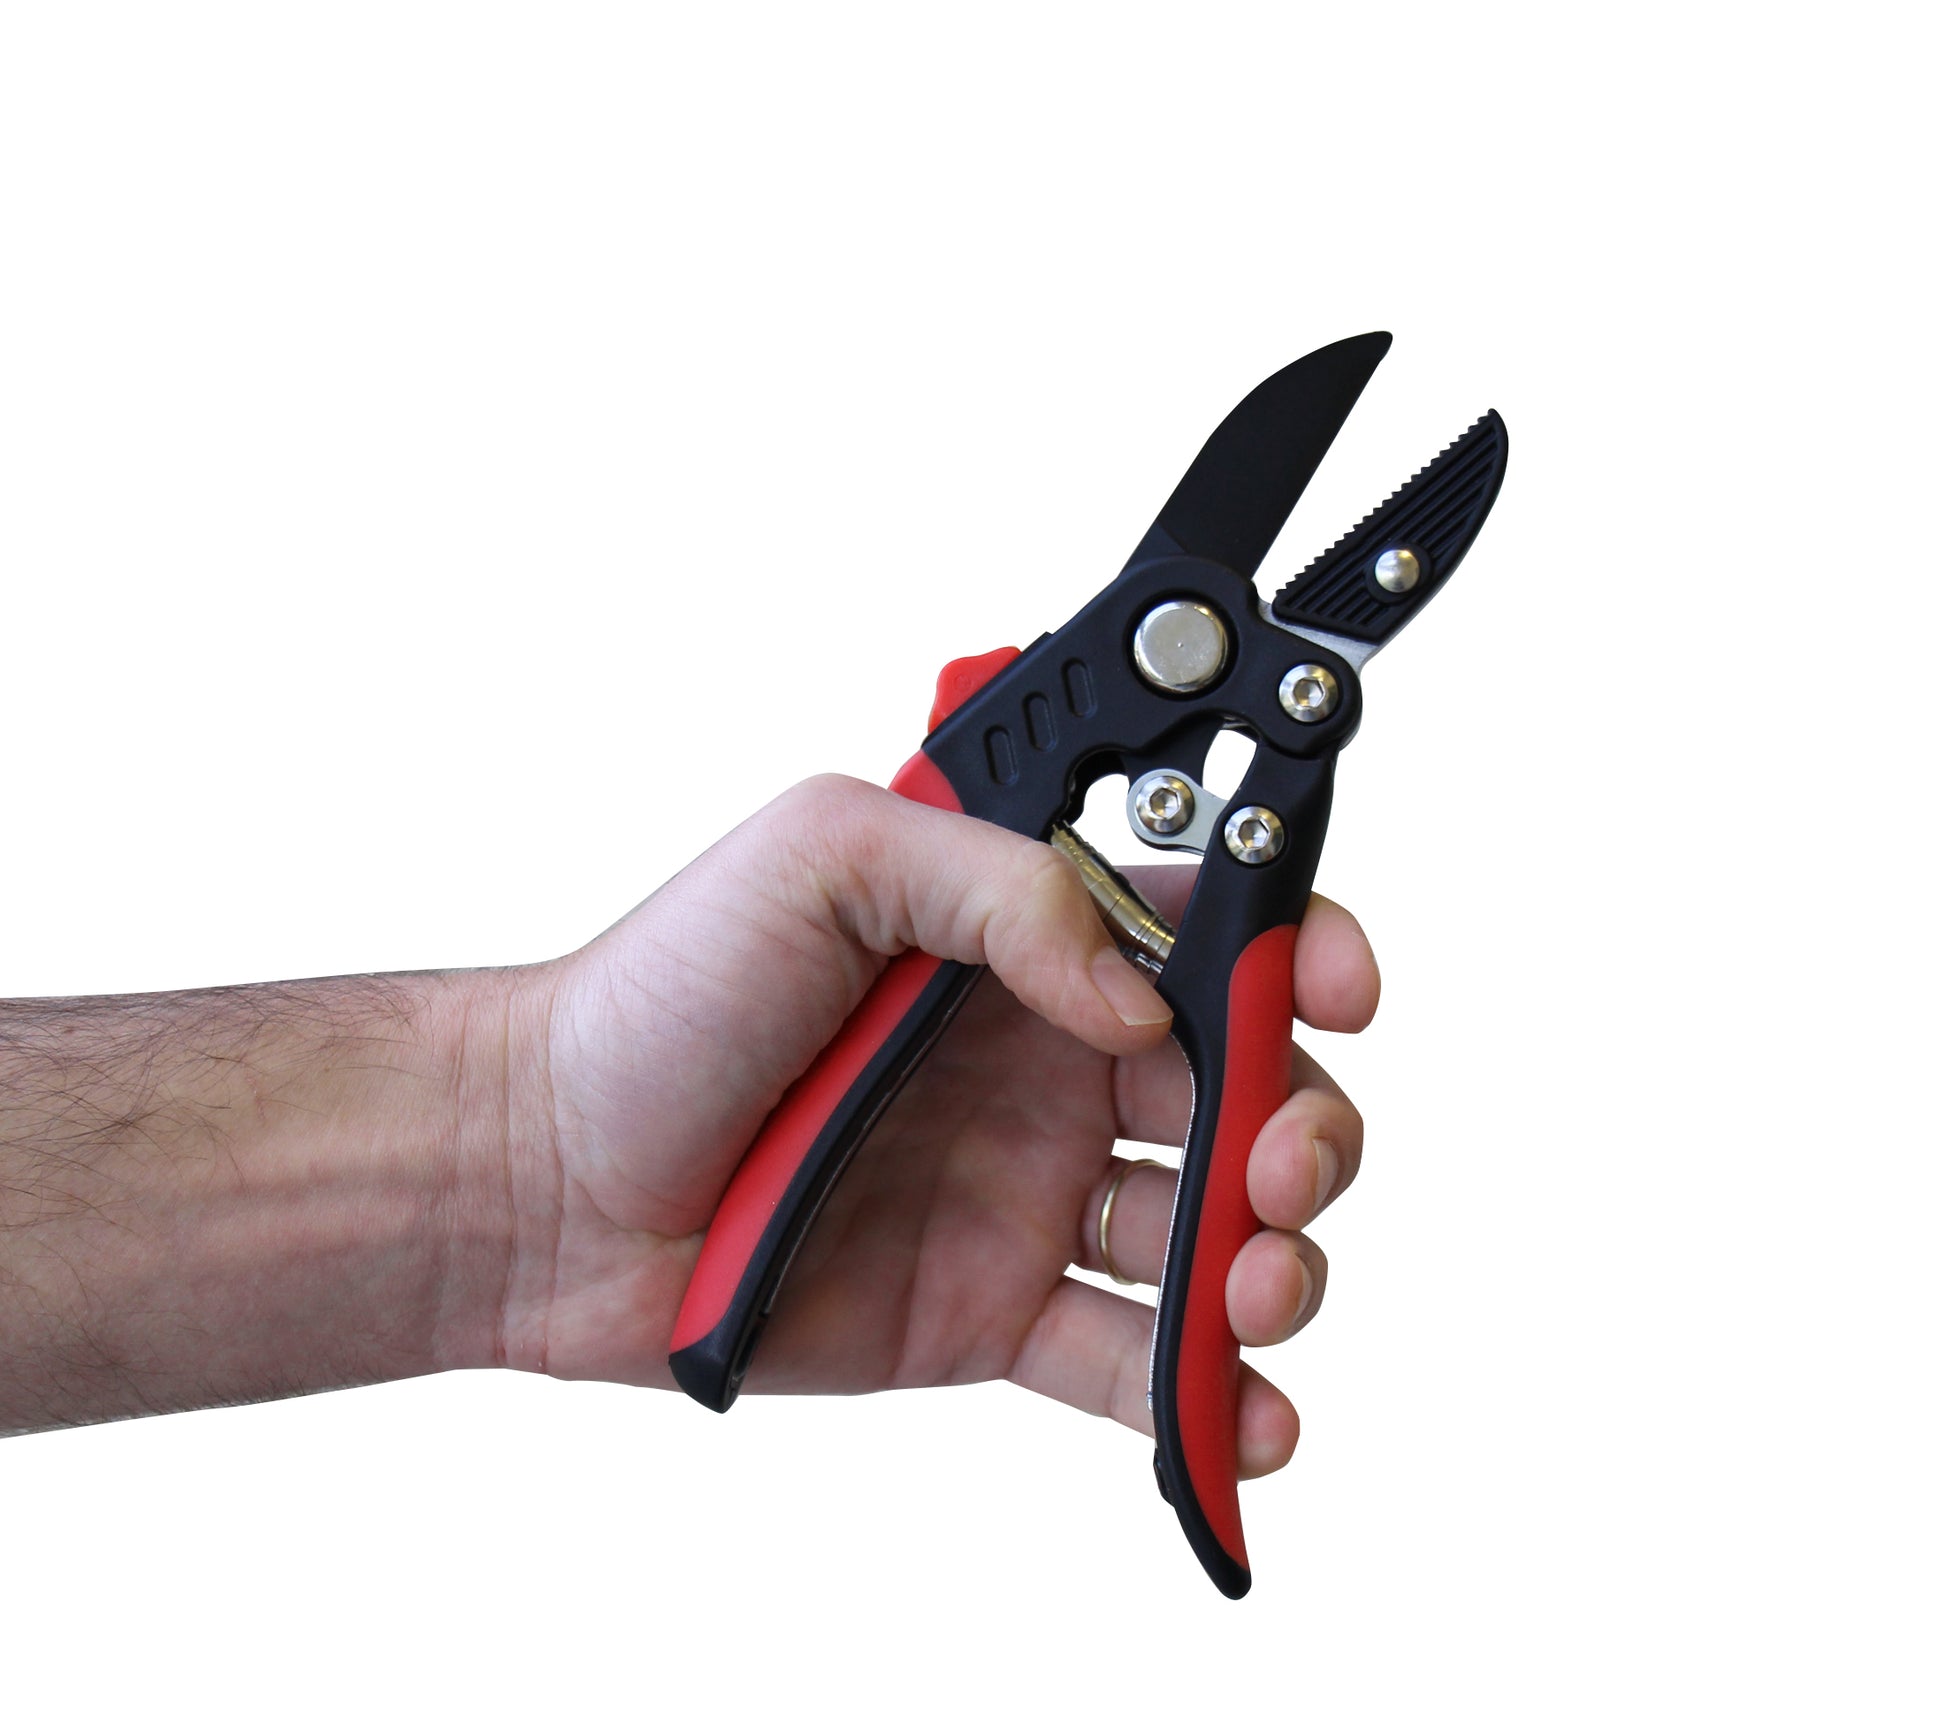  schaller Easy Threader Craft Tool, Red : Tools & Home  Improvement